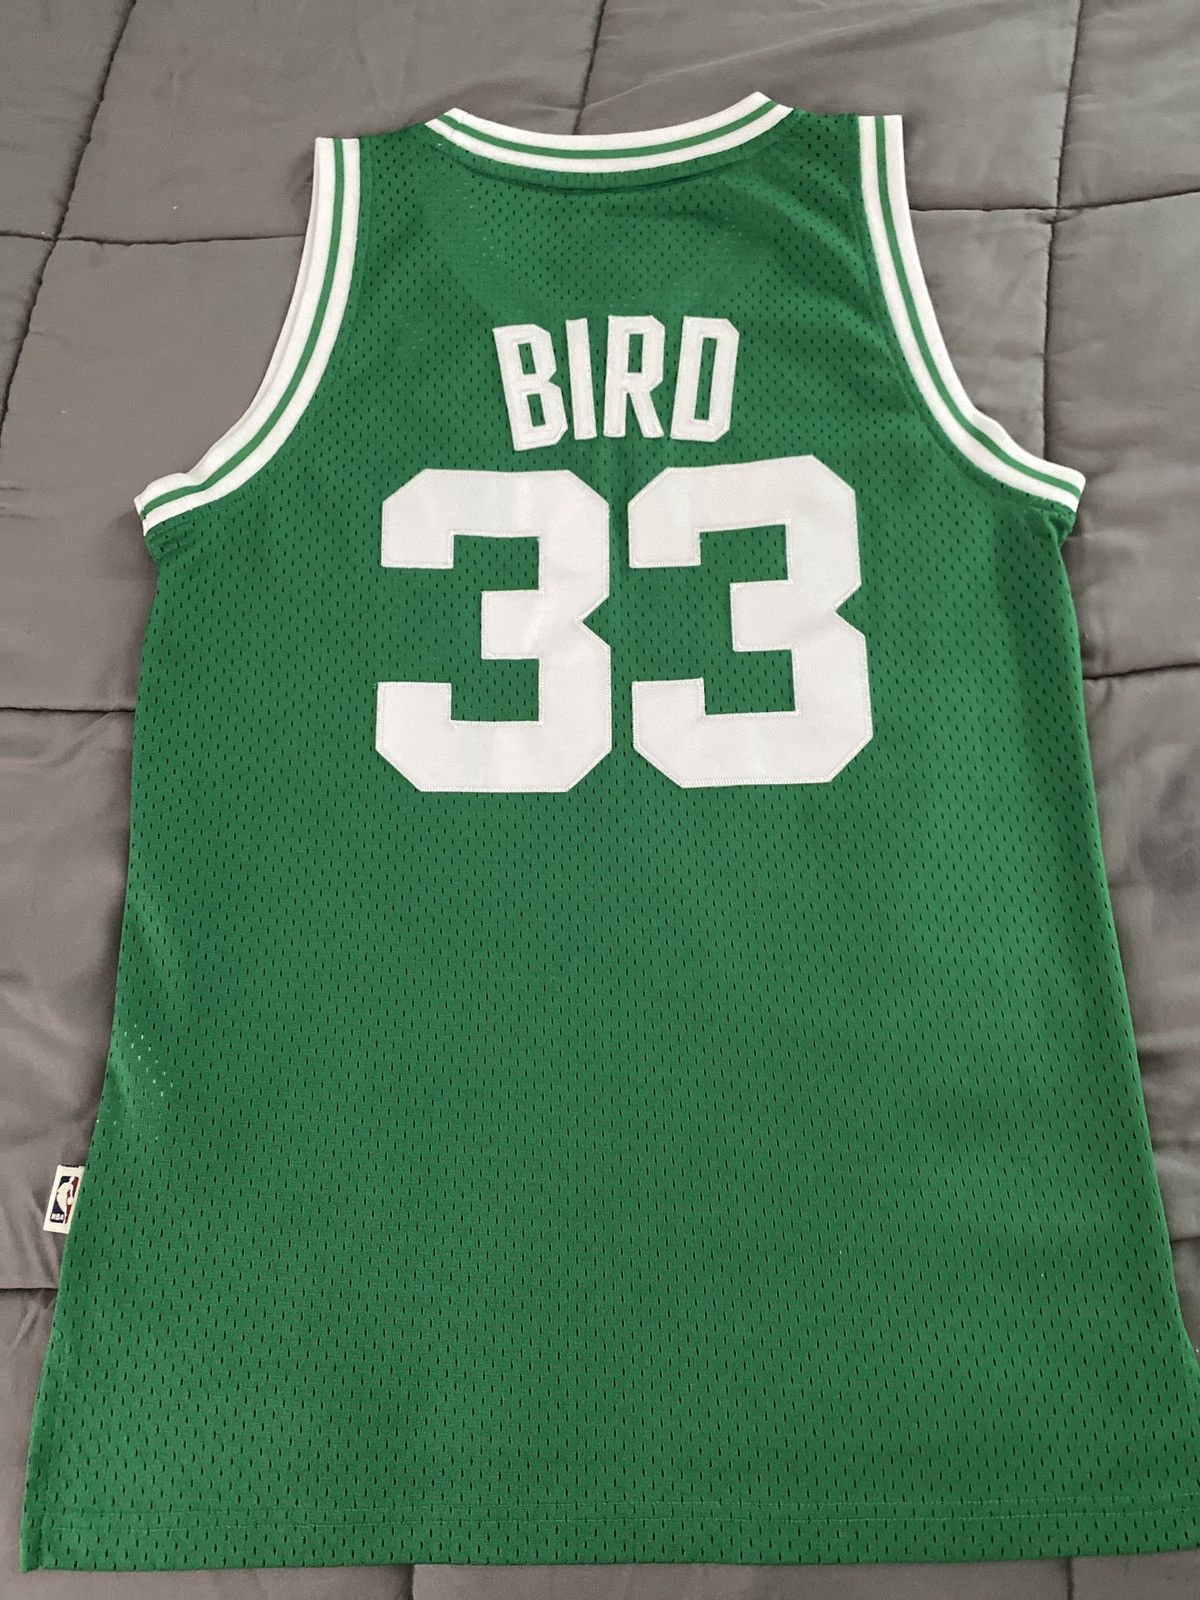 Adidas Hardwood Classics Larry Bird Celtics Jersey Size US S / EU 44-46 / 1 - 2 Preview